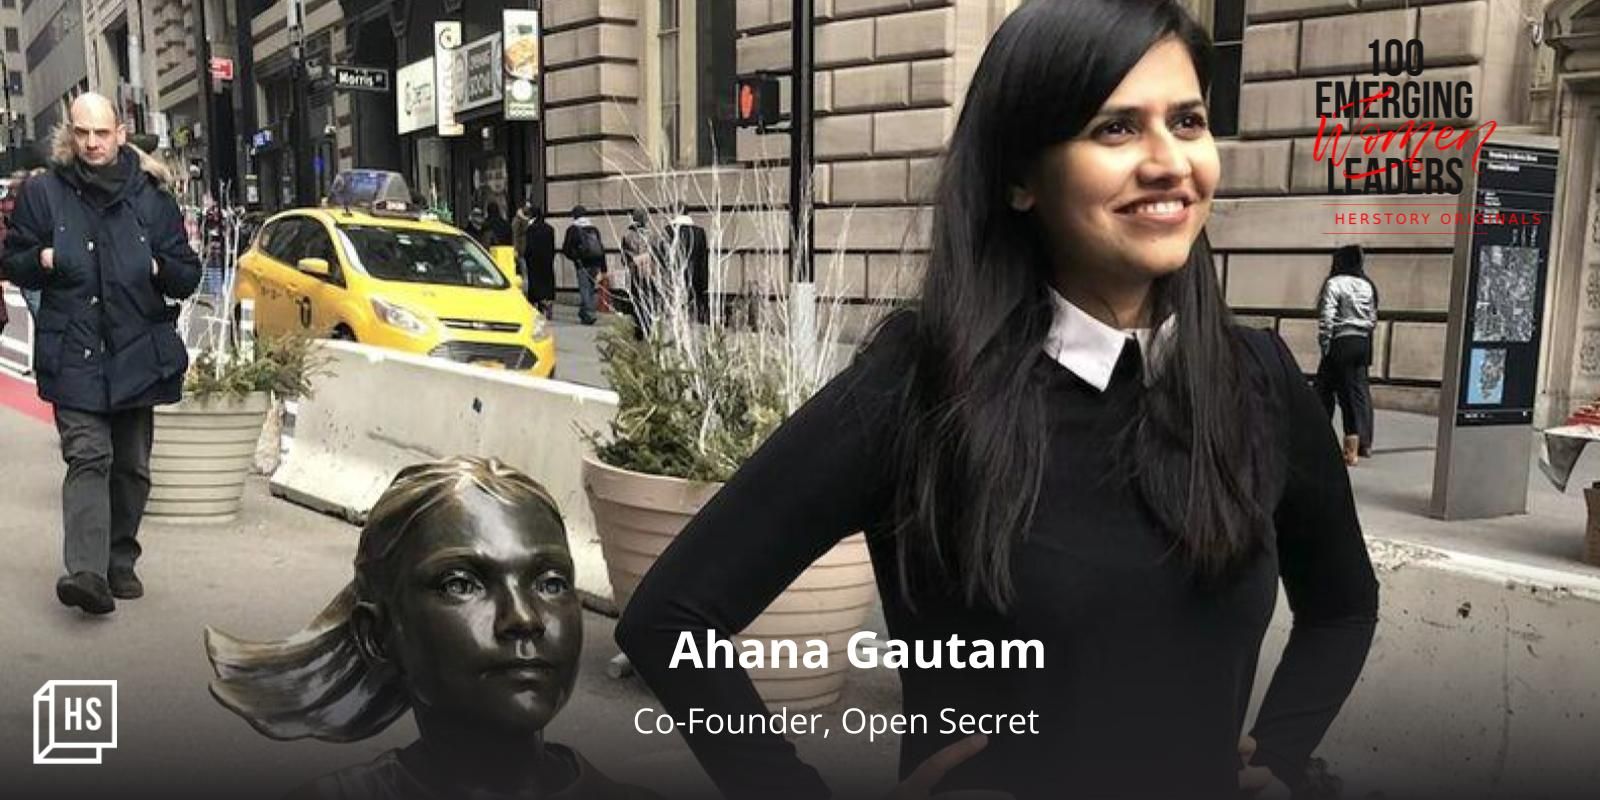 [100 Emerging Women Leaders] Open Secret’s Ahana Gautam aims to change India’s snacking habits